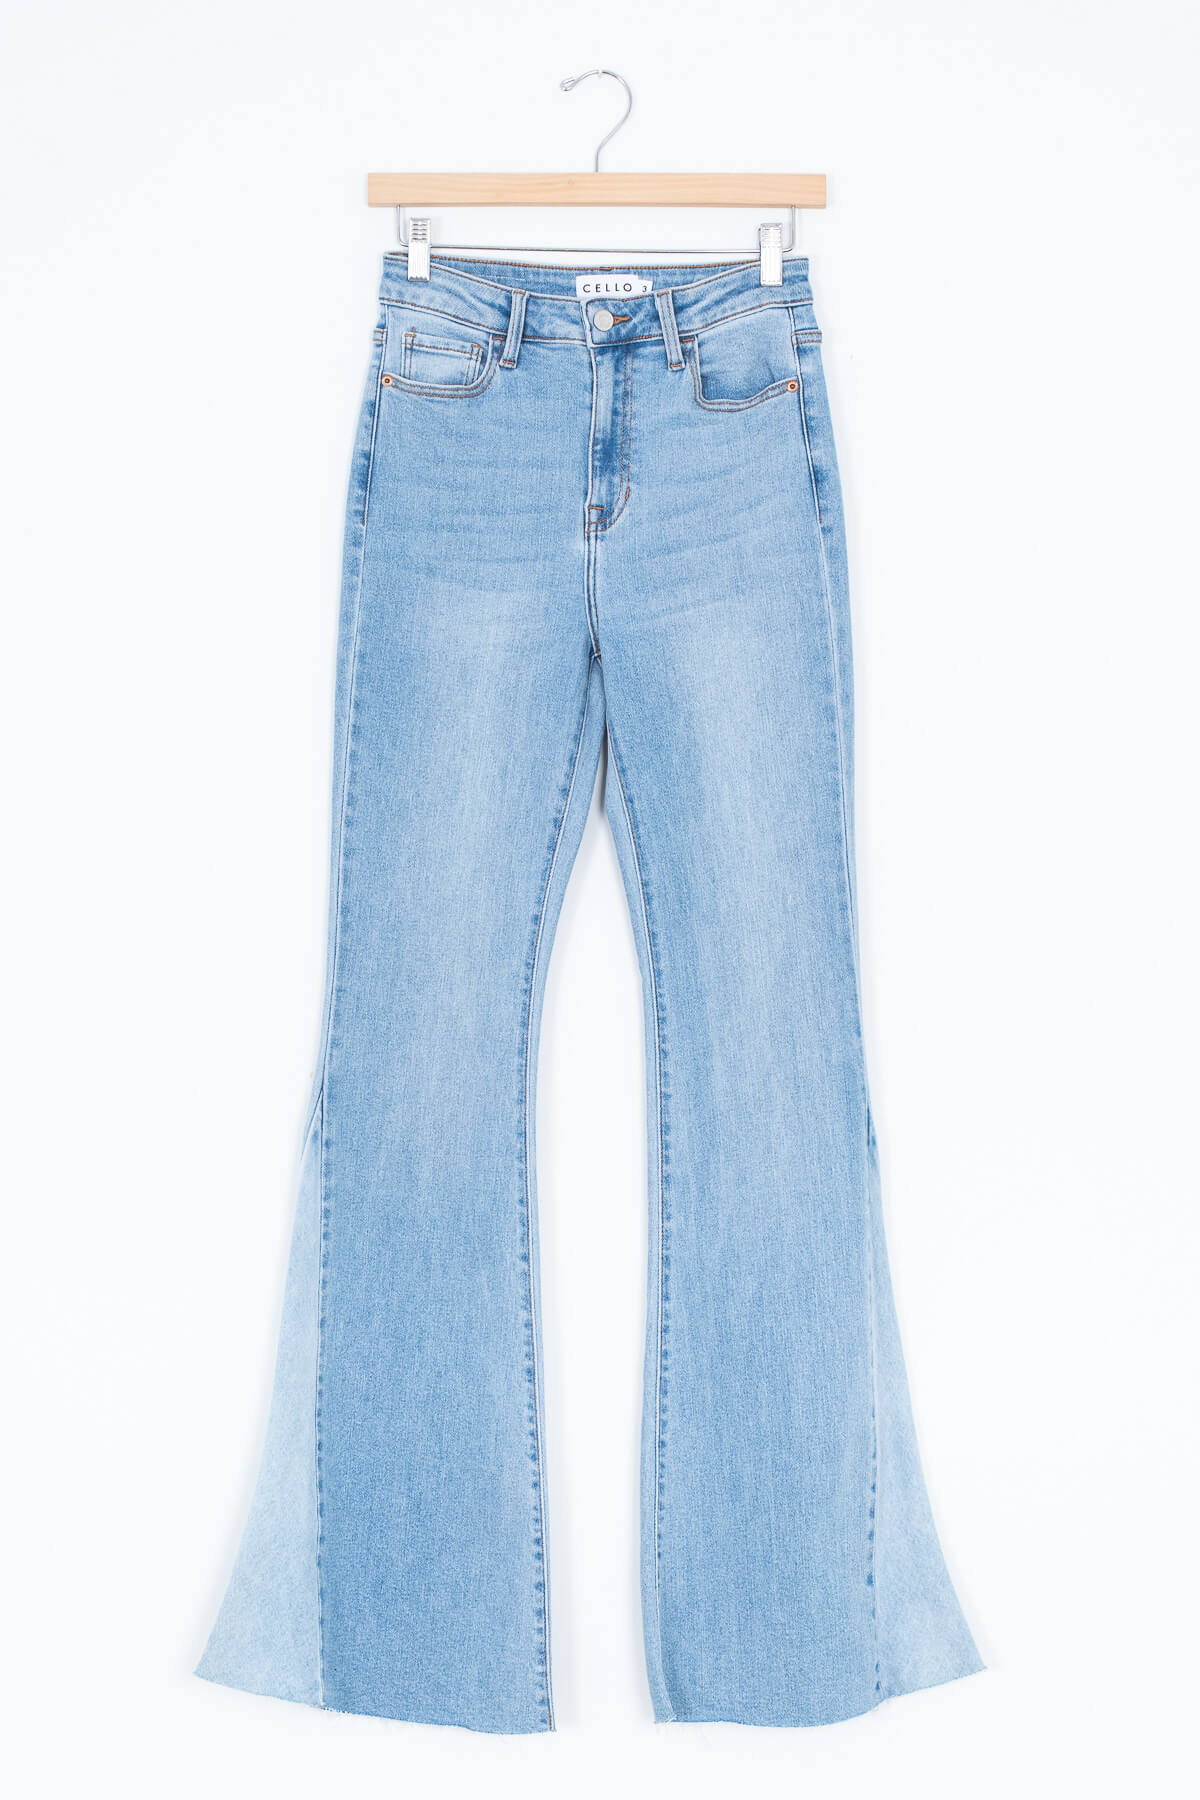 Women's bohemian bellbottom light blue jeans | Kariella